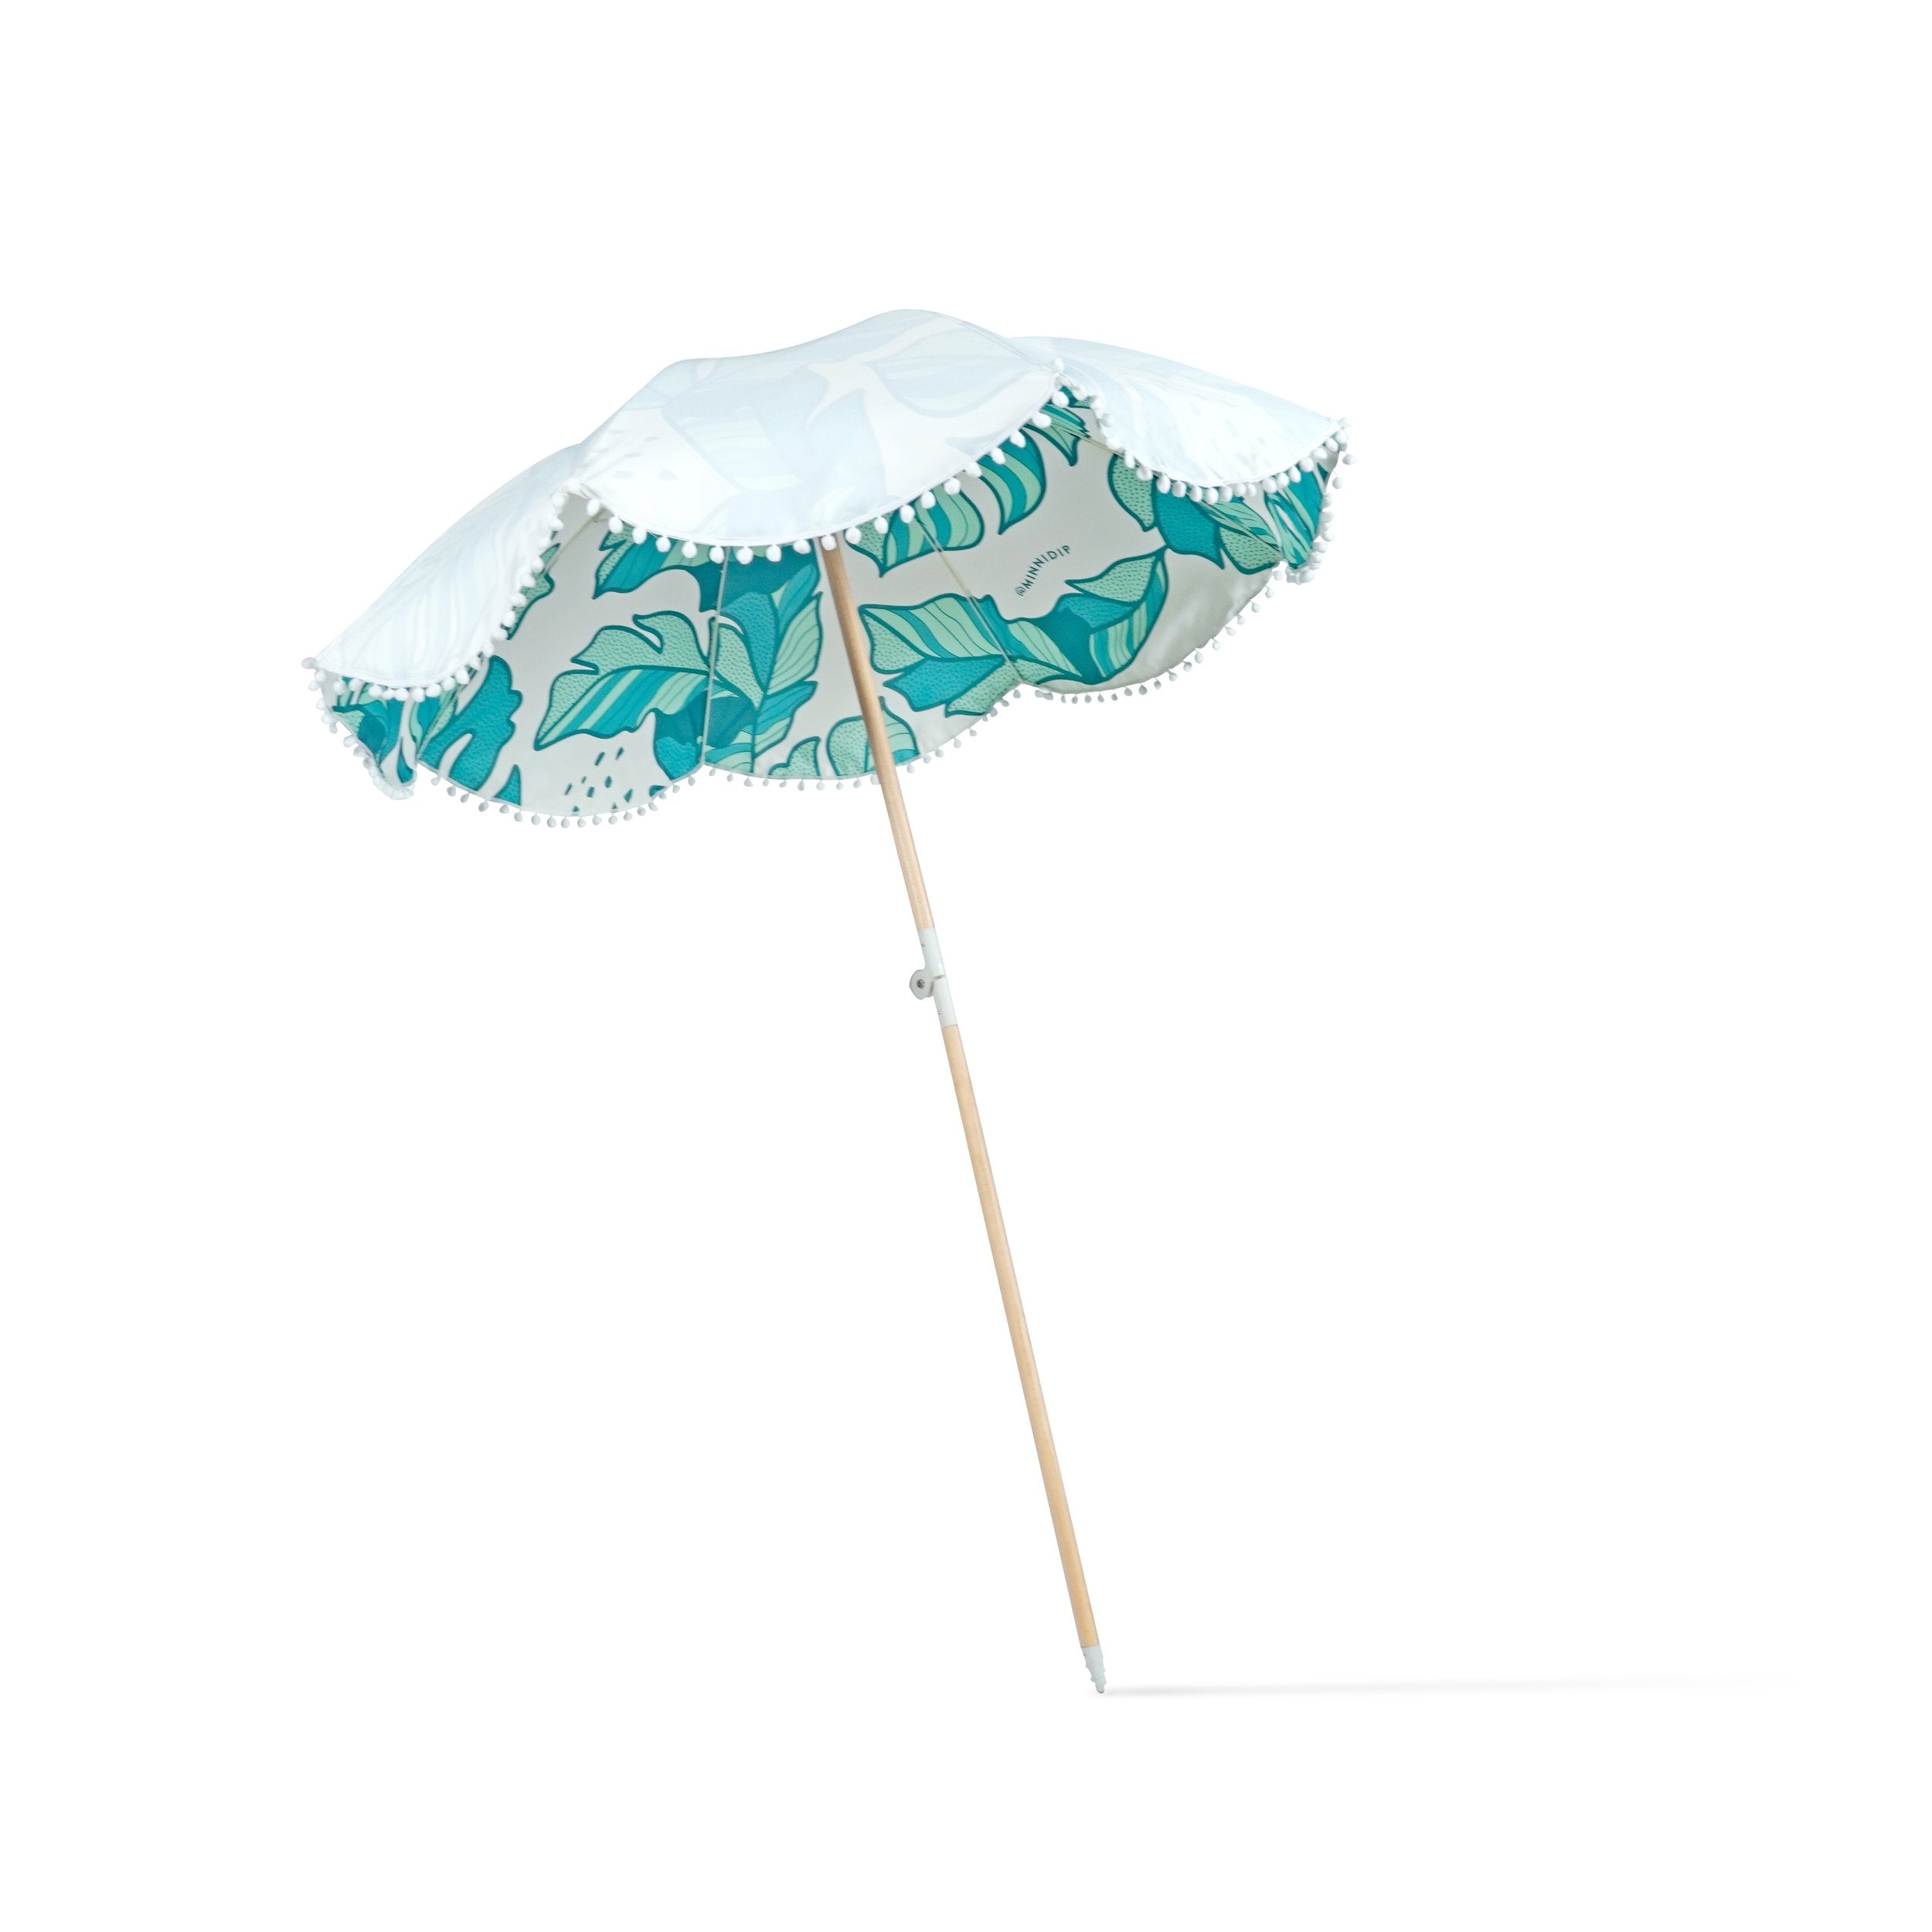 the TROPICAL PALMS Beach Umbrella